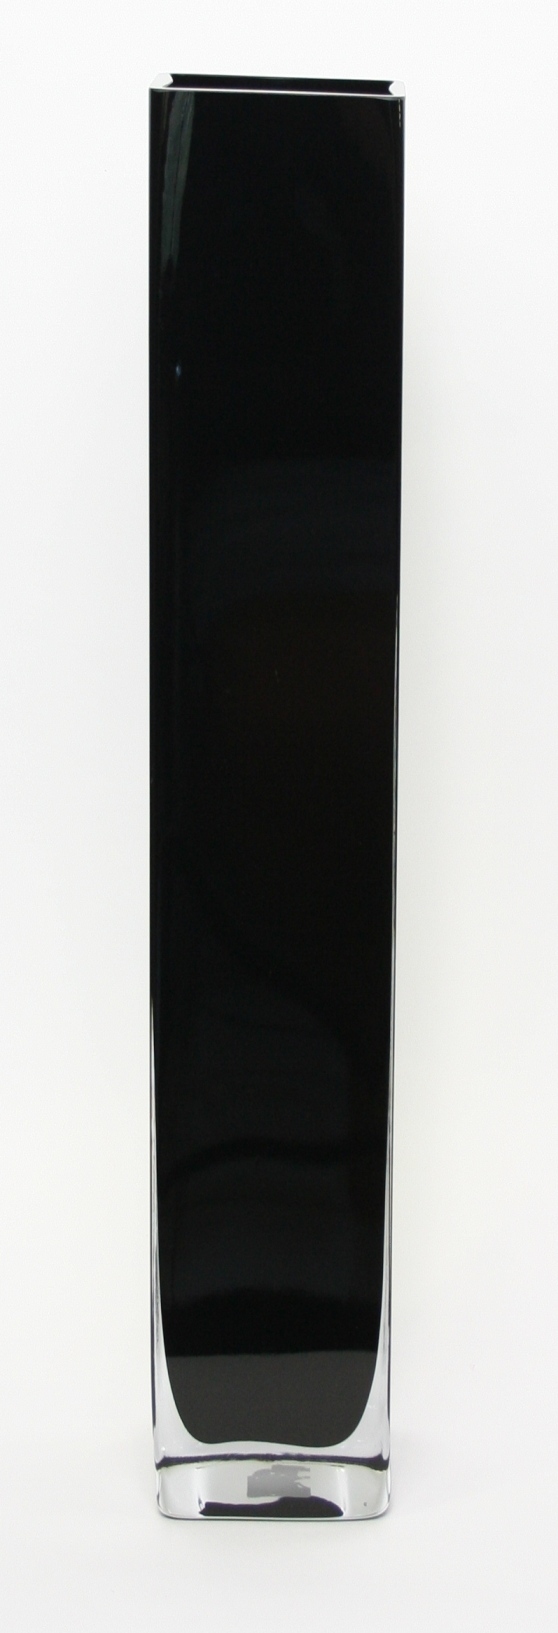 Accuvaas zwart glas 10 cm breed 50 cm hoog heavy glas